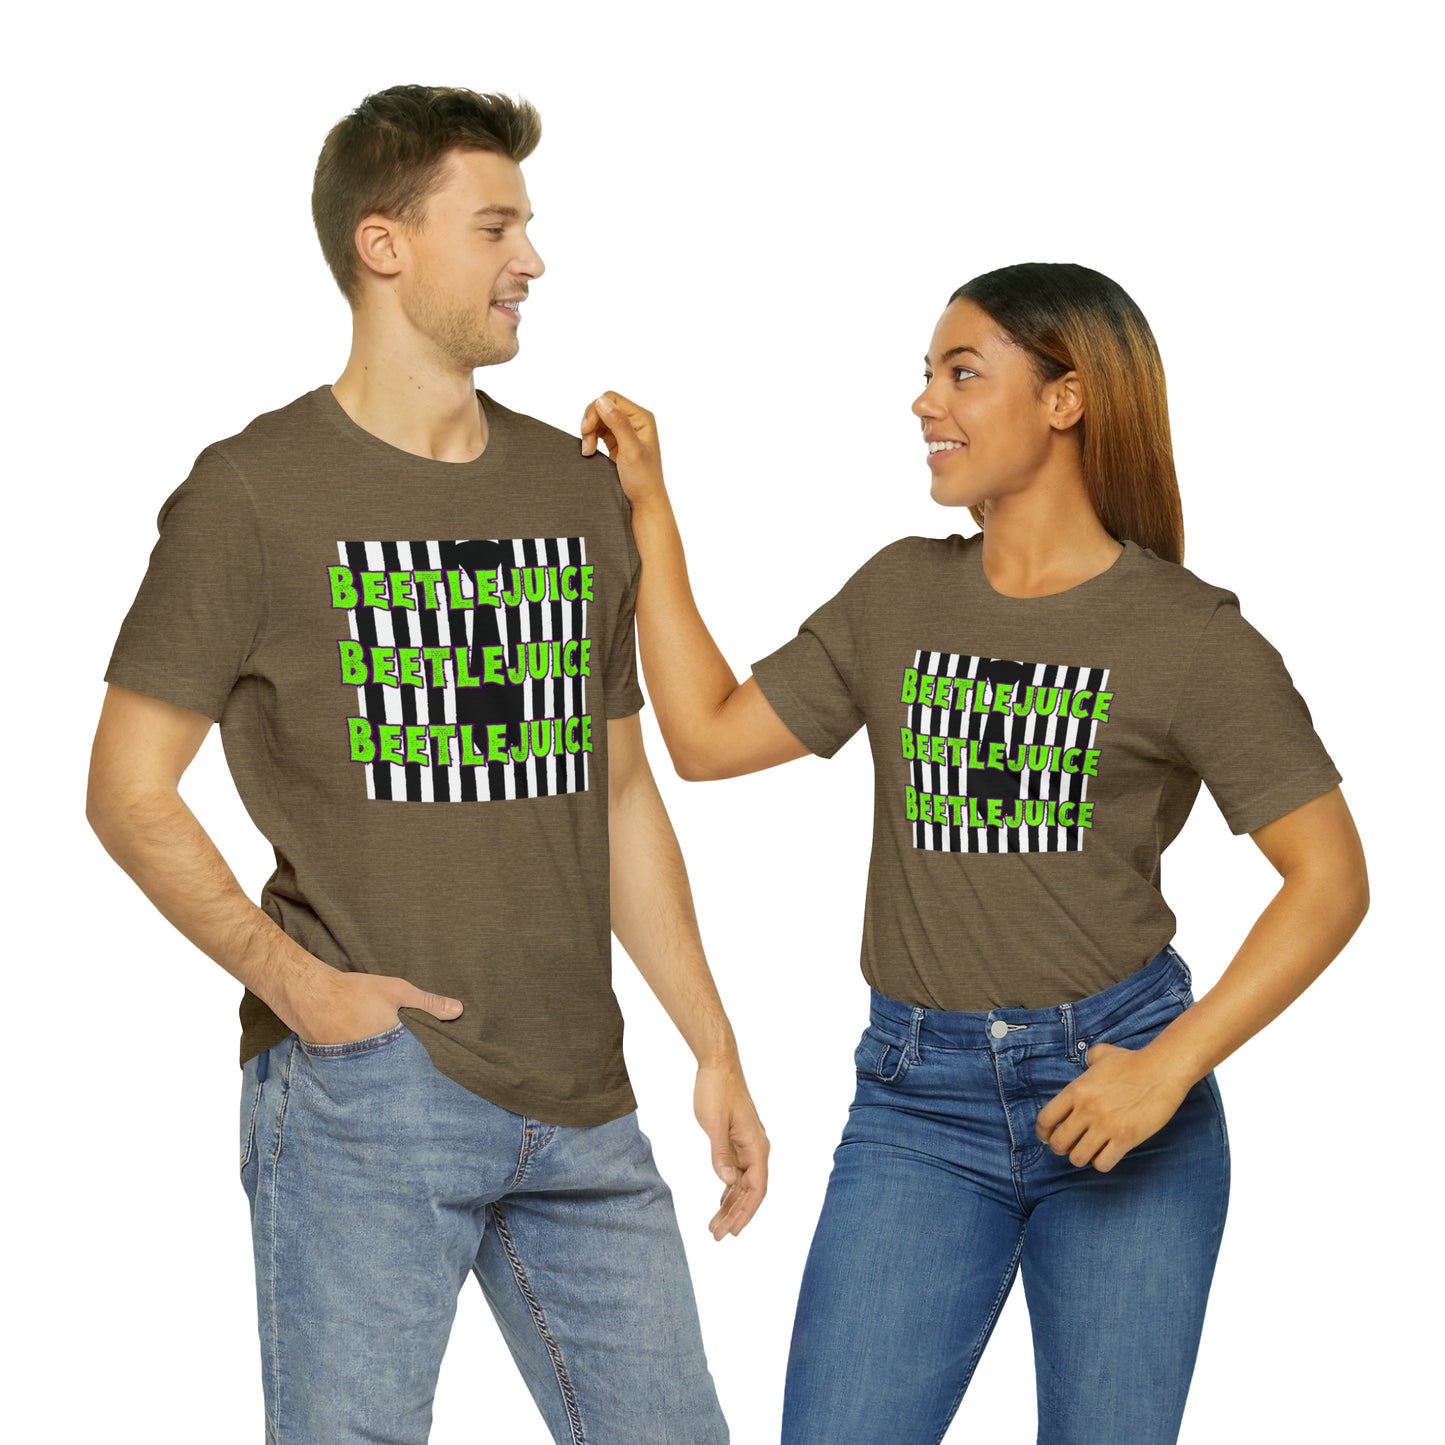 Beetlejuice Shirt, New Beetlejuice Movie Excluse Design, Halloween Shirt